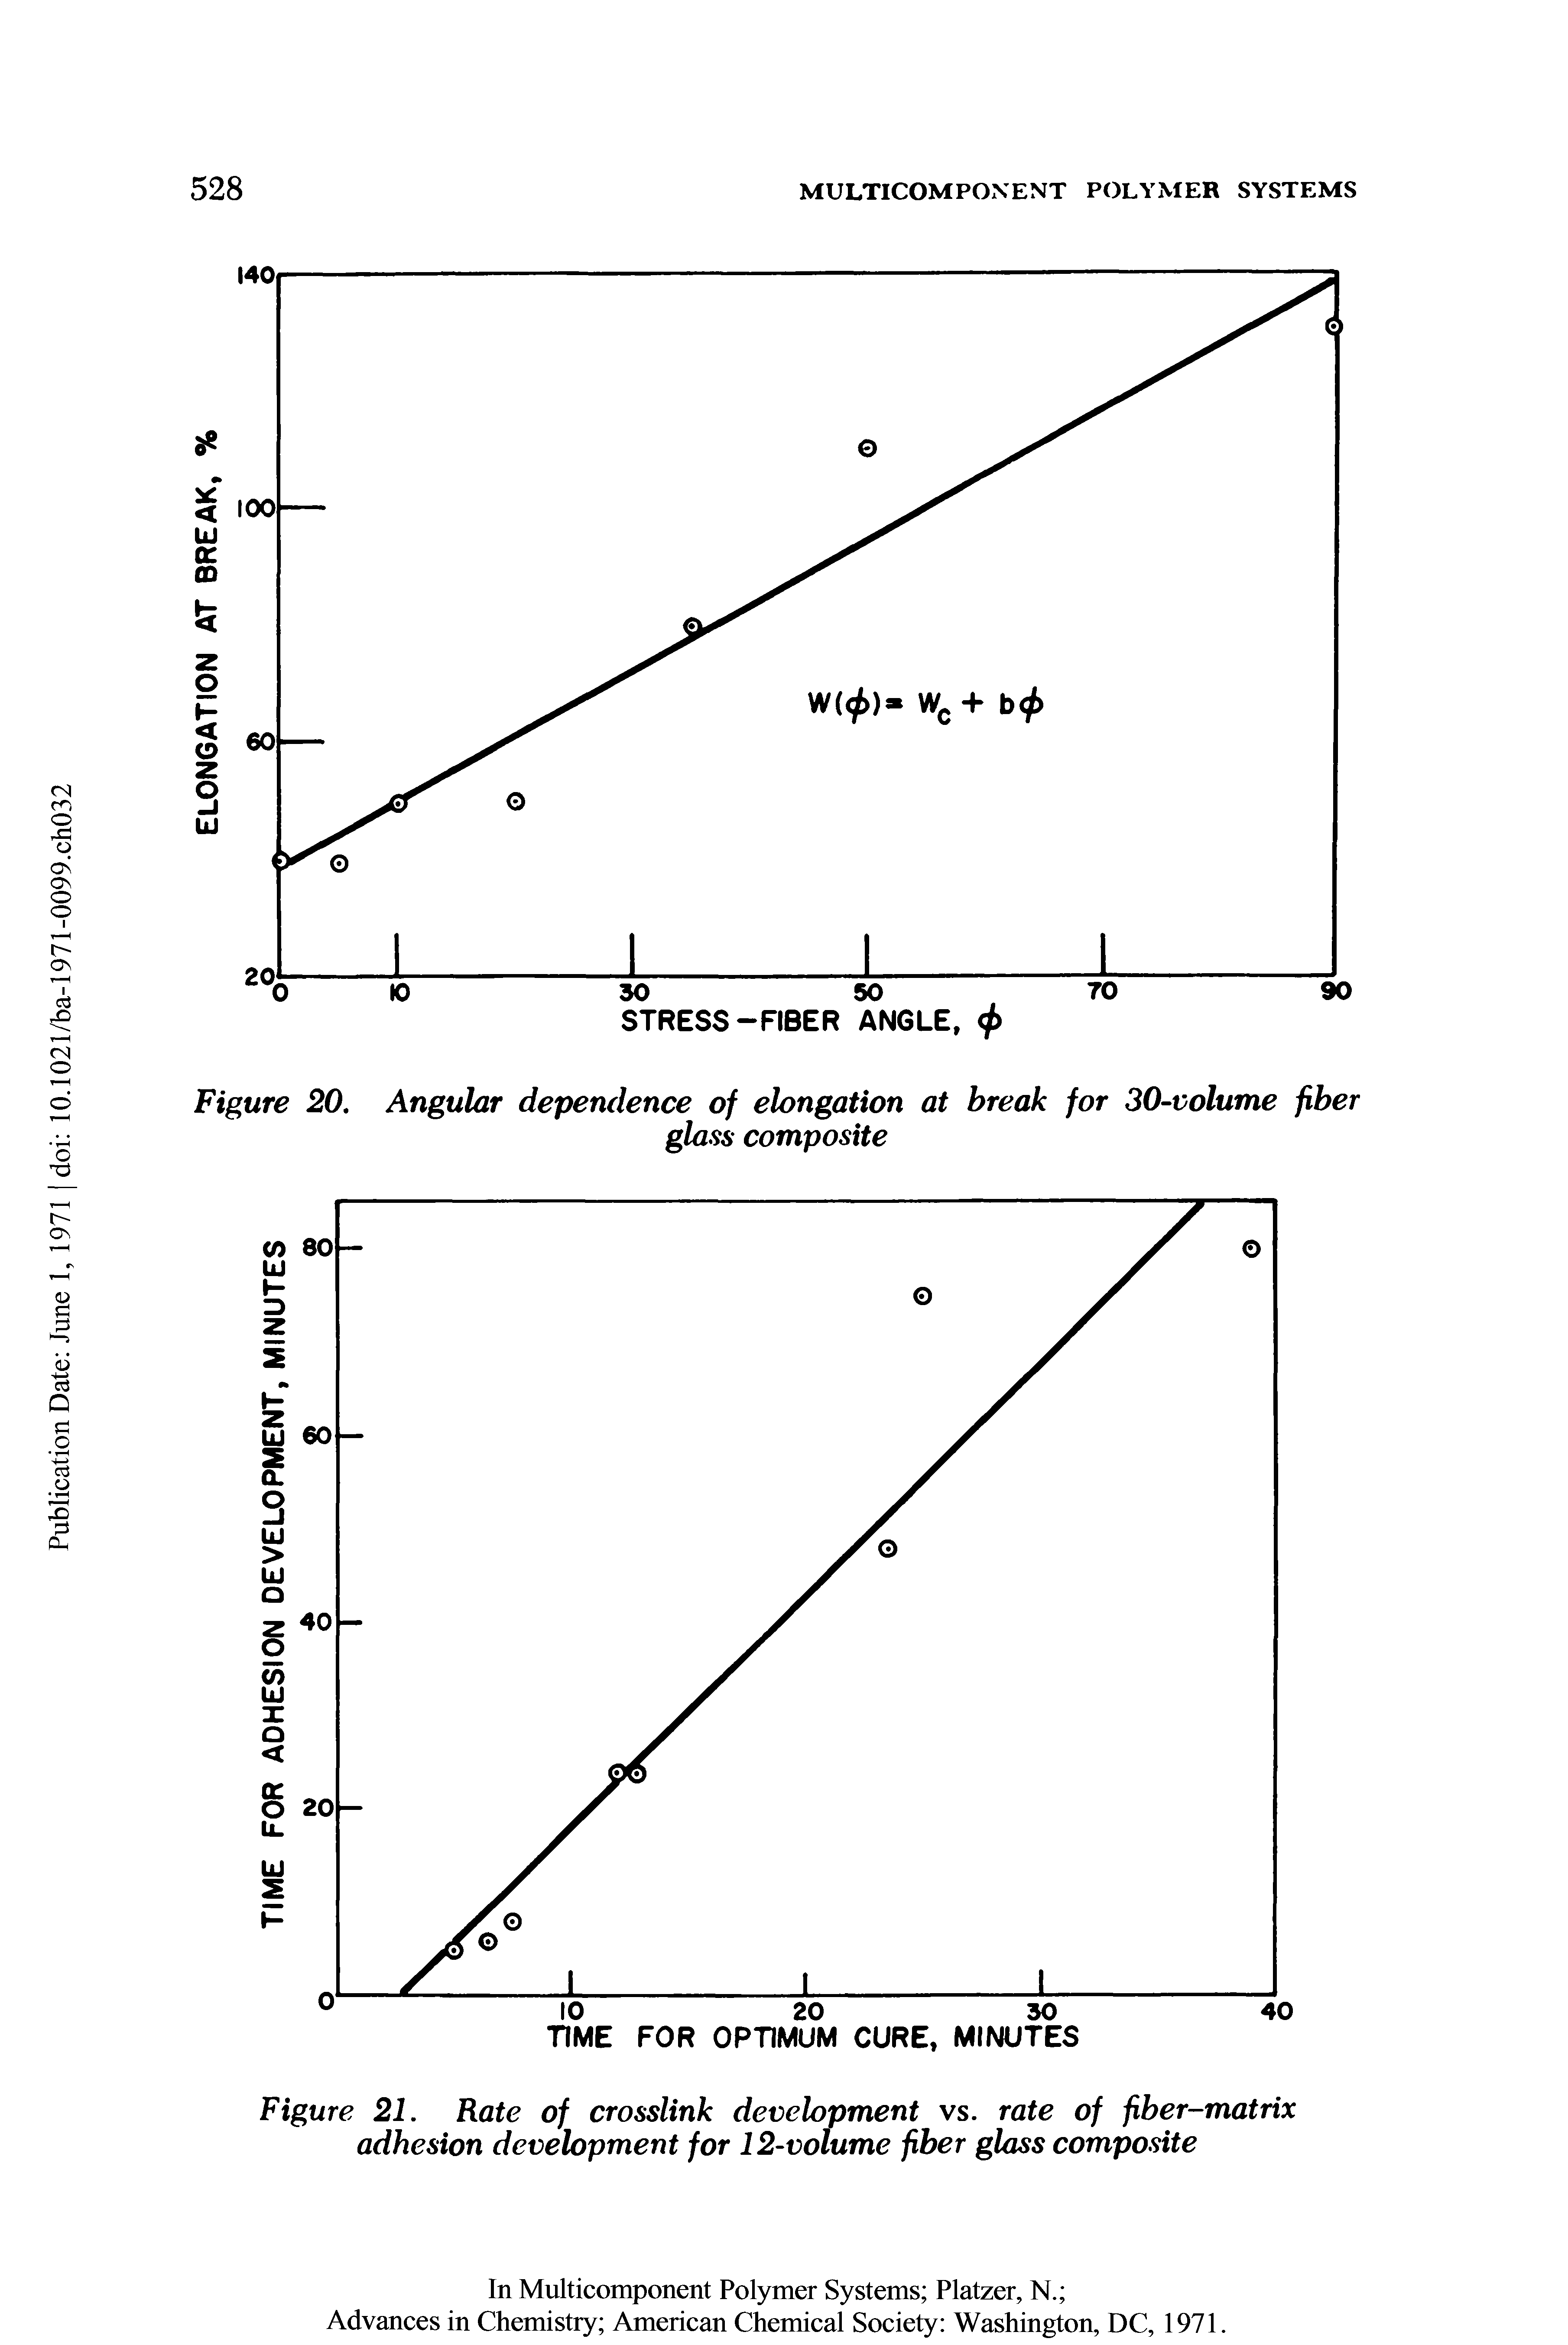 Figure 21. Rate of crosslink development vs. rate of fiber-matrix adhesion development for 12-volume fiber glass composite...